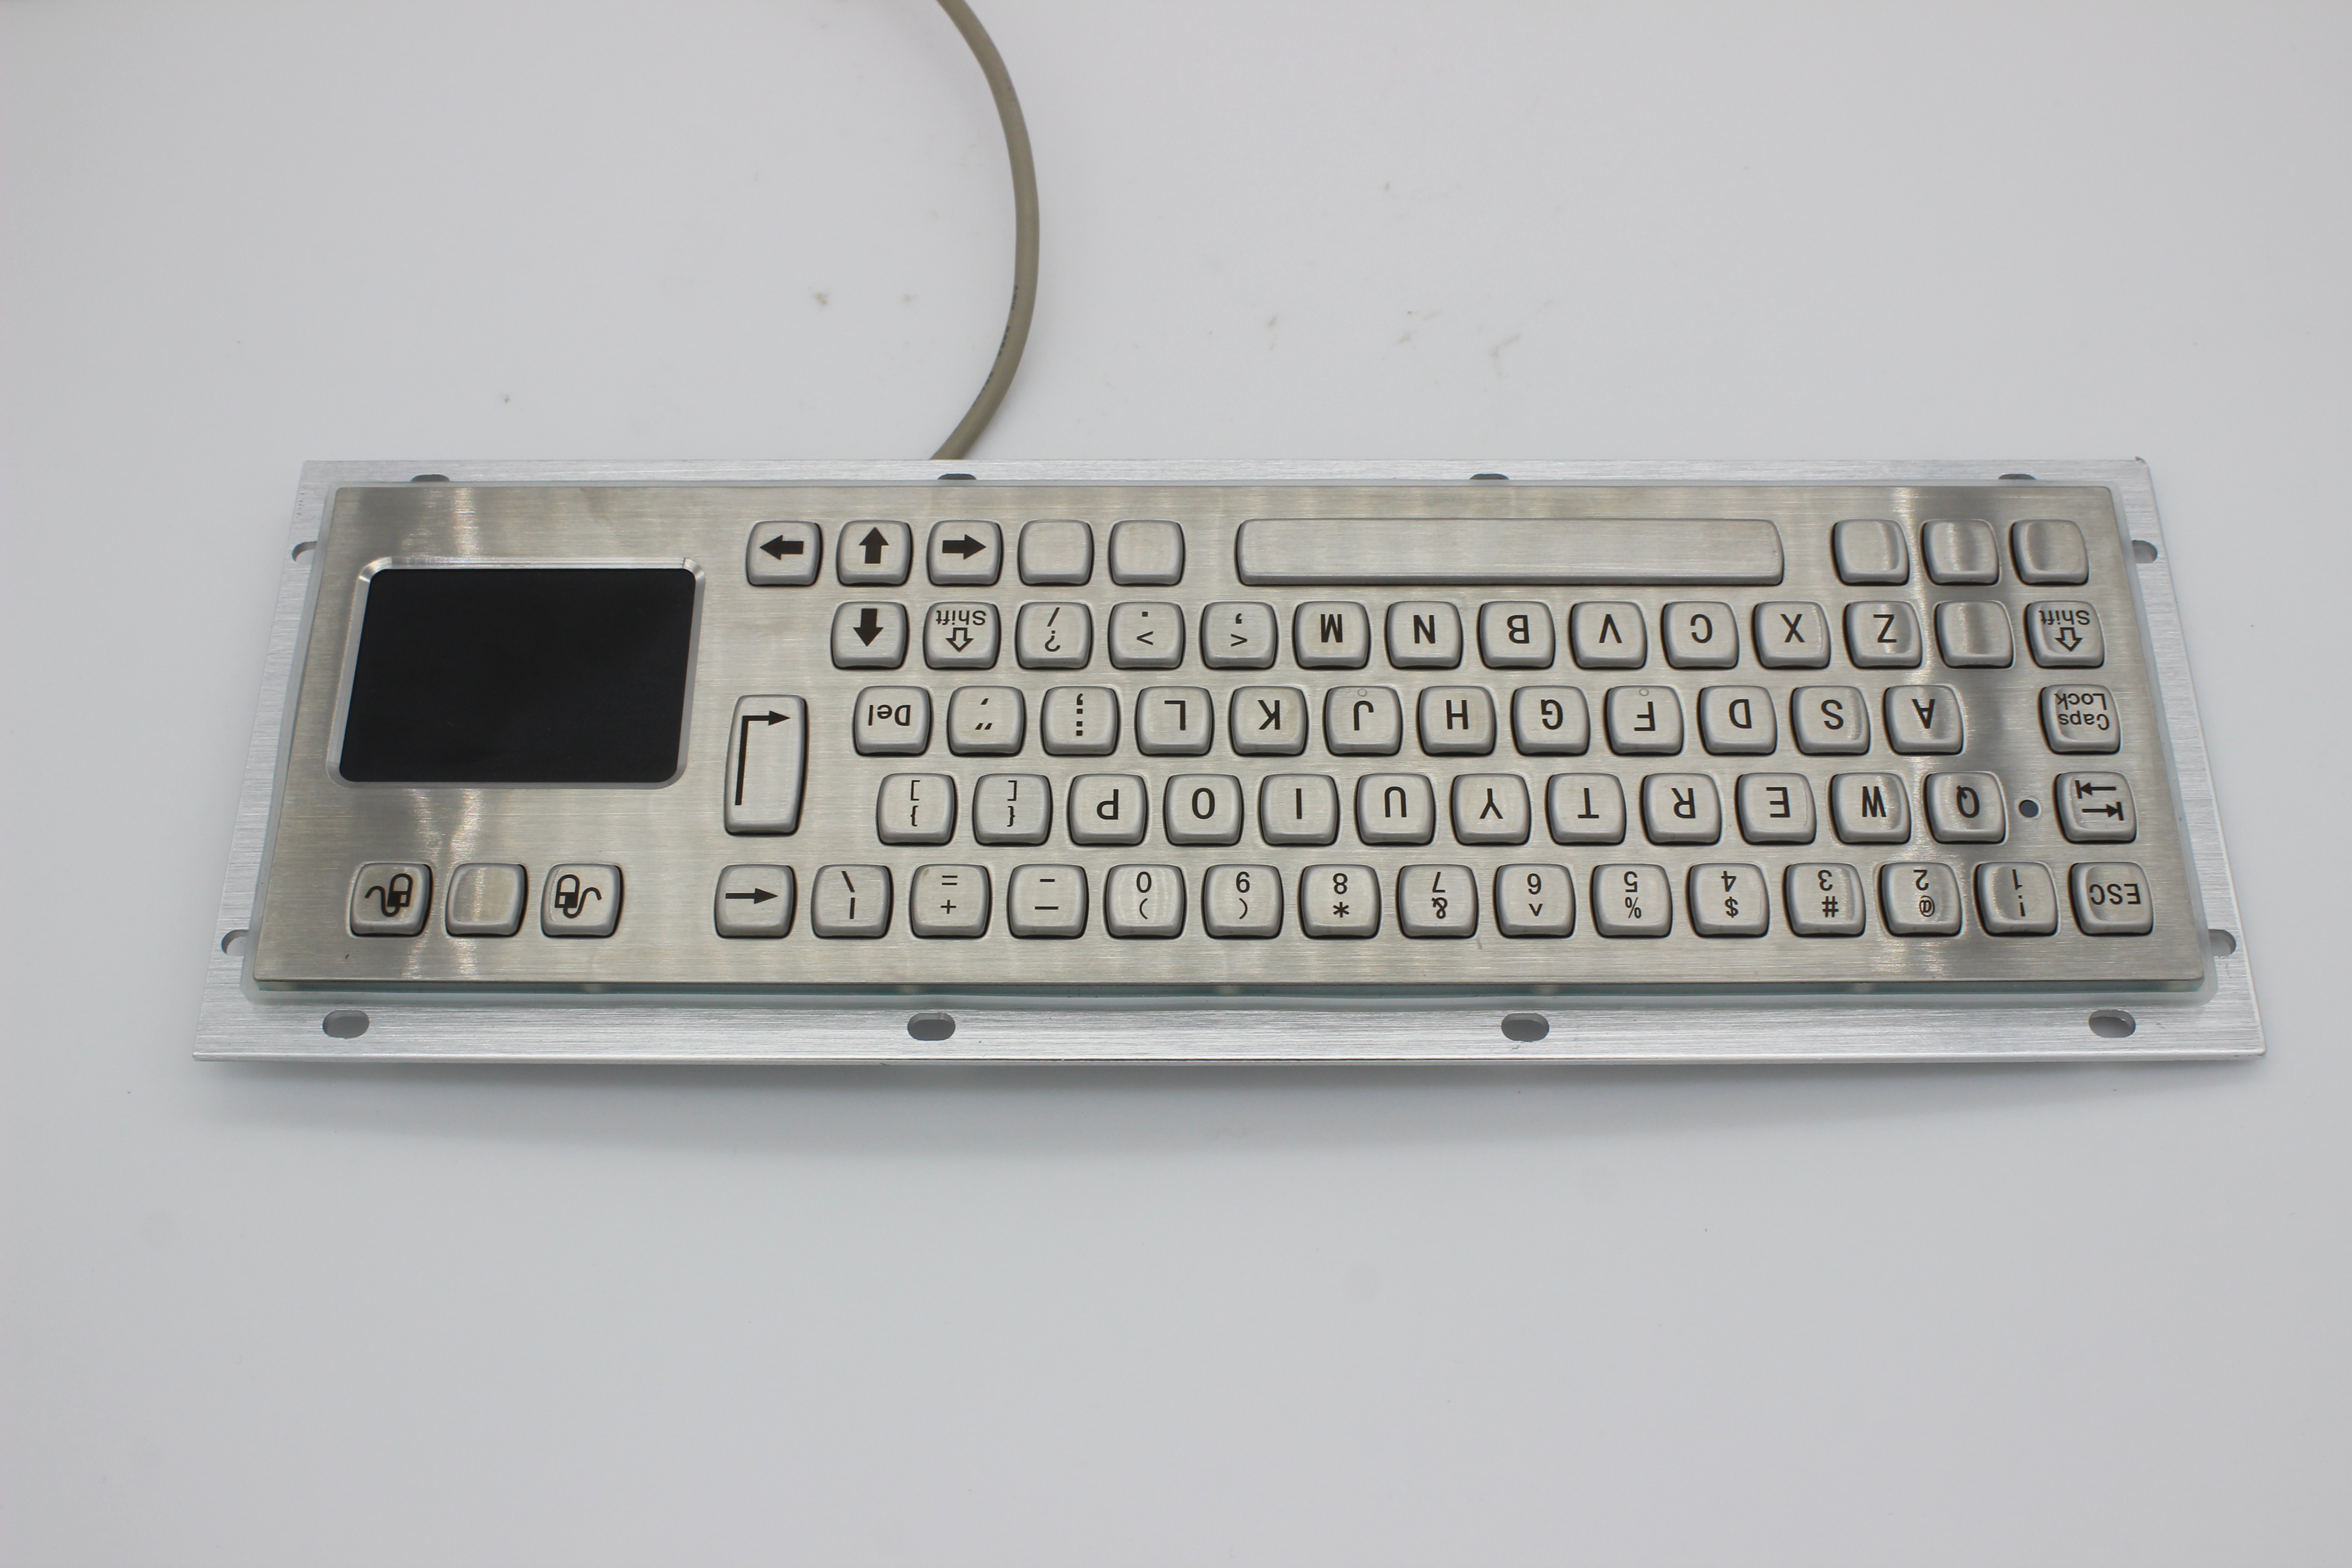 K17 Kim loại Keyboad với TouchPad SPC330am (1) _1080